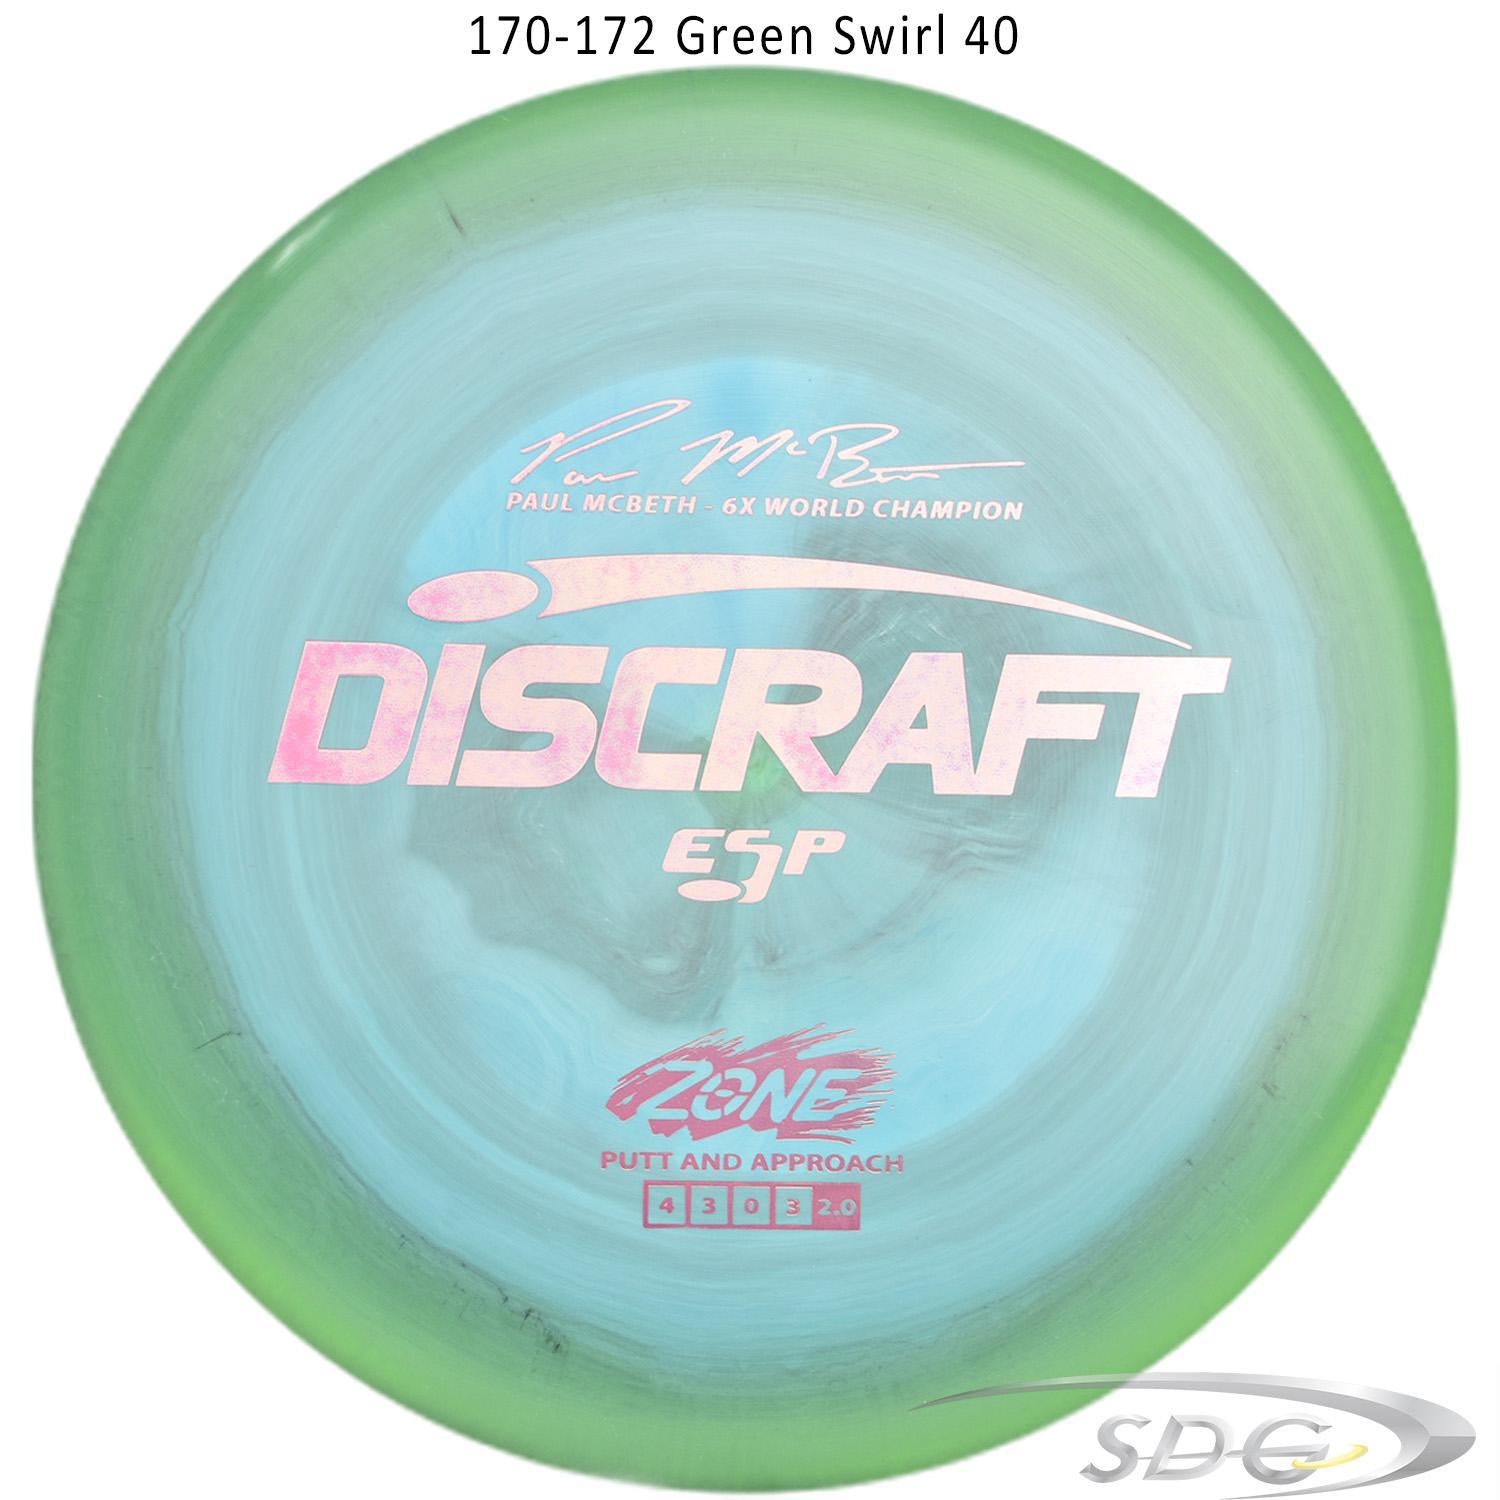 discraft-esp-zone-6x-paul-mcbeth-signature-series-disc-golf-putter-172-170-weights 170-172 Green Swirl 40 